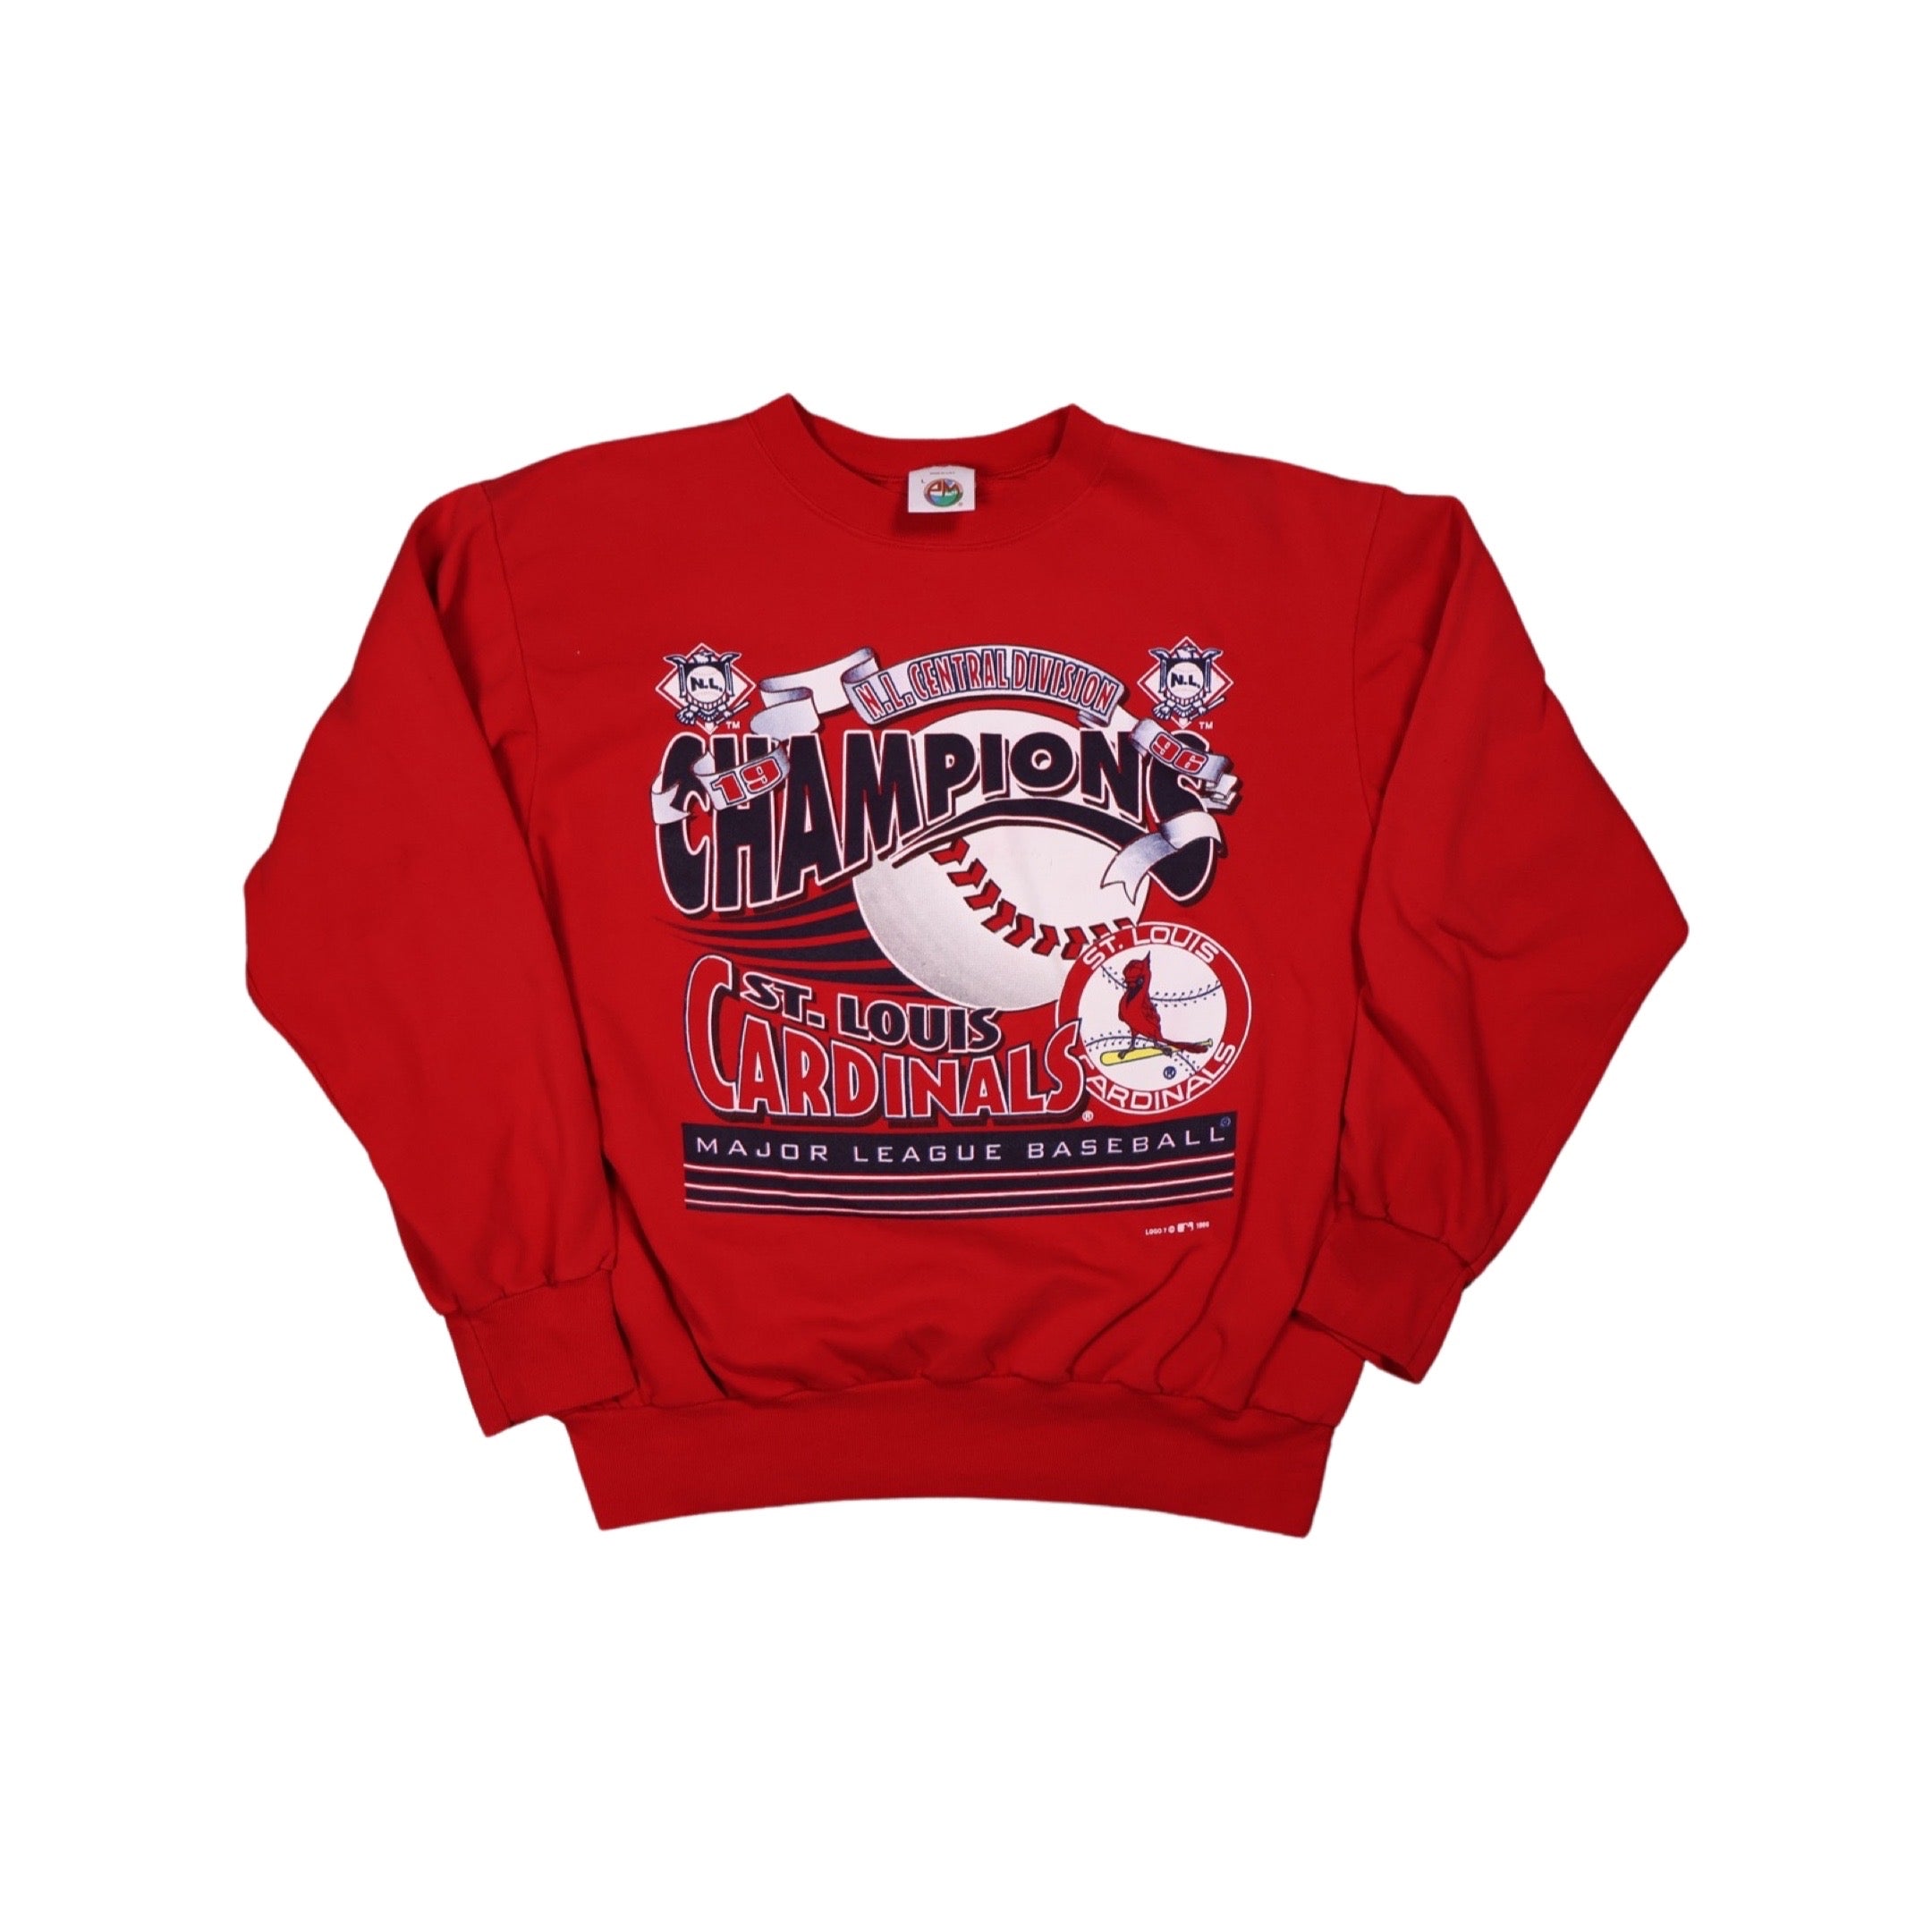 St. Louis Cardinals 1996 Division Champs Sweater (Large)